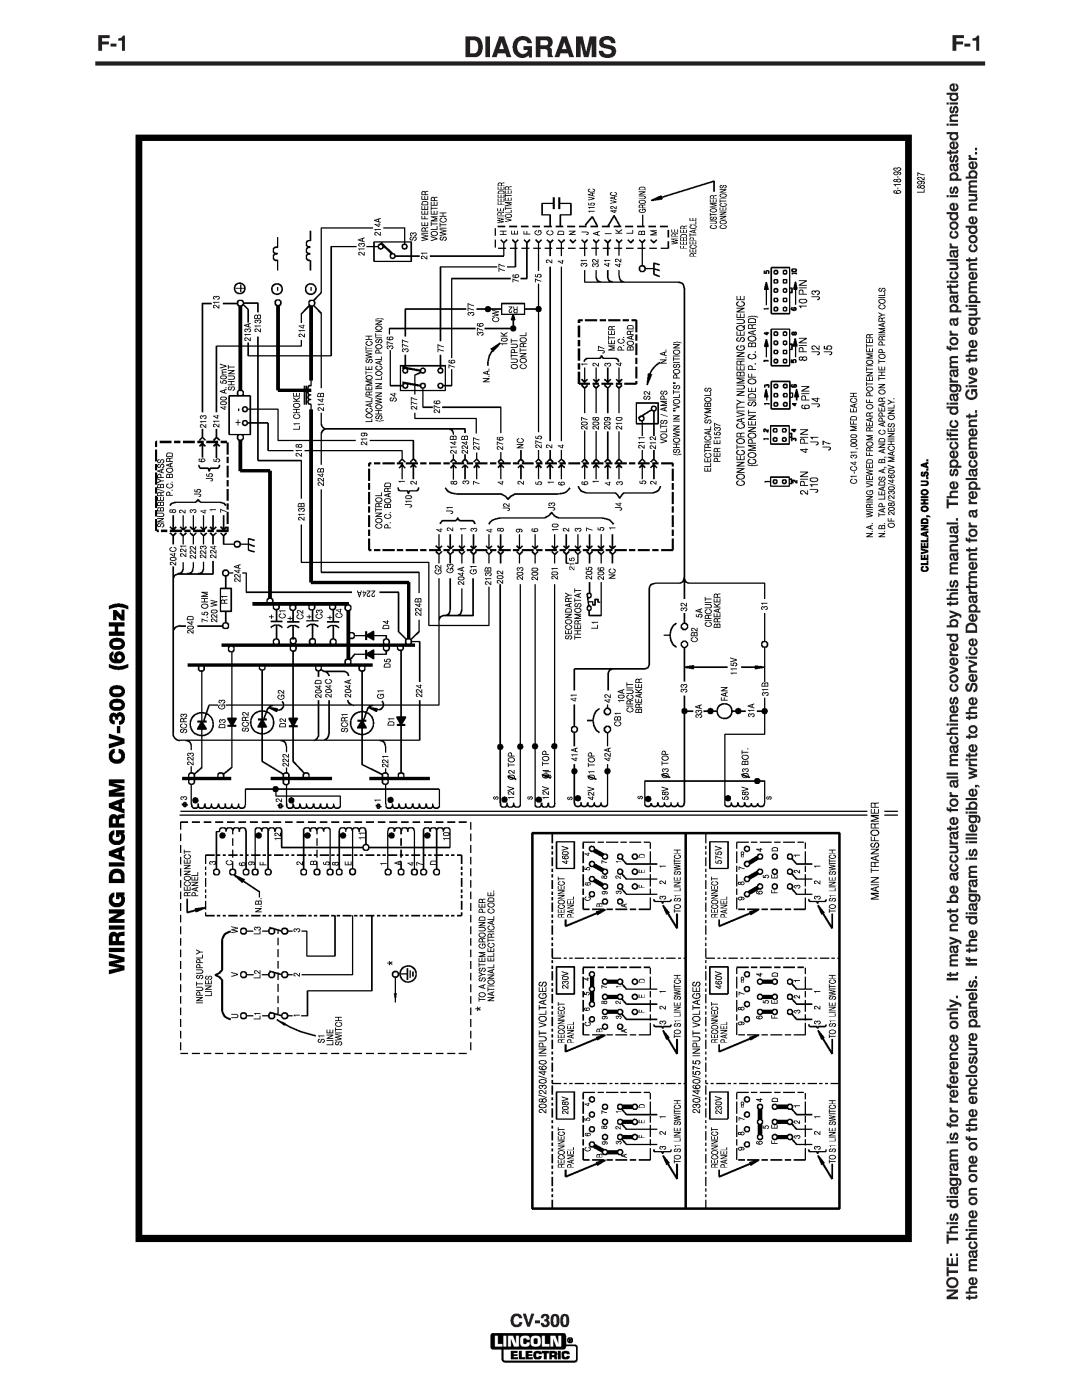 Lincoln Electric manual WIRING DIAGRAM CV-300 60Hz, 2 PIN, 6 PIN, Main Transformer 